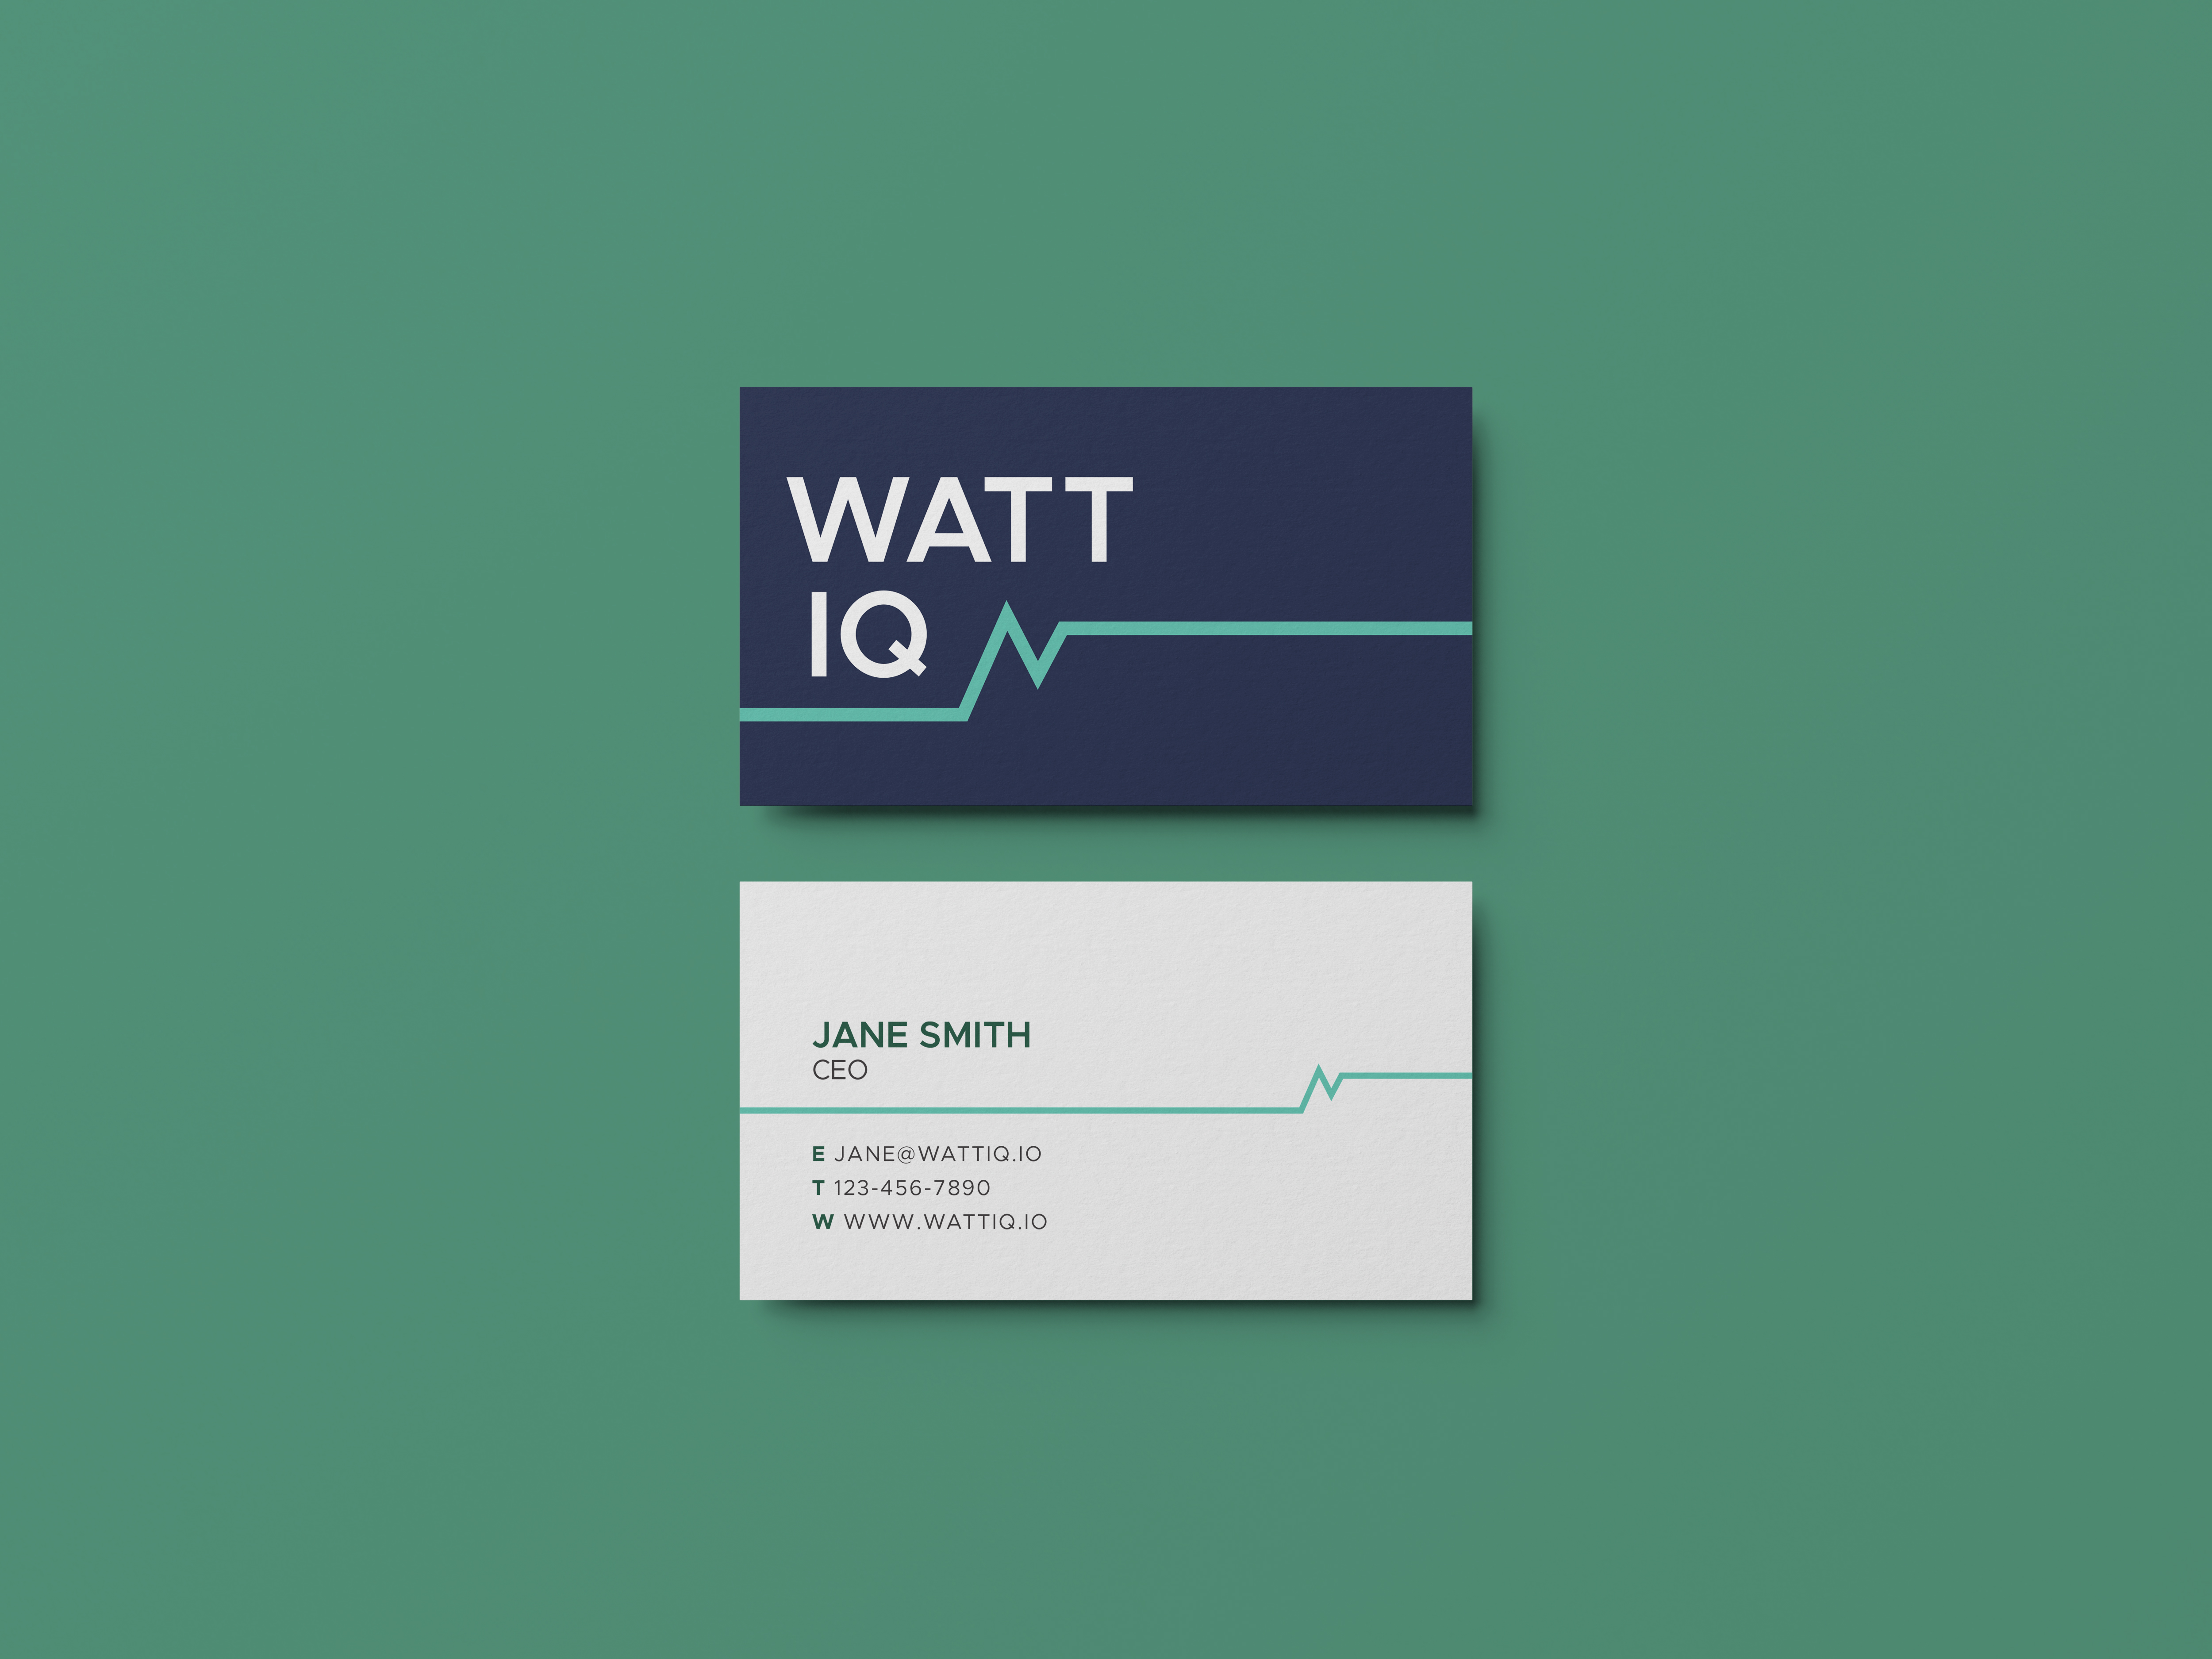 WattIQ buiness cards featuring their logo.